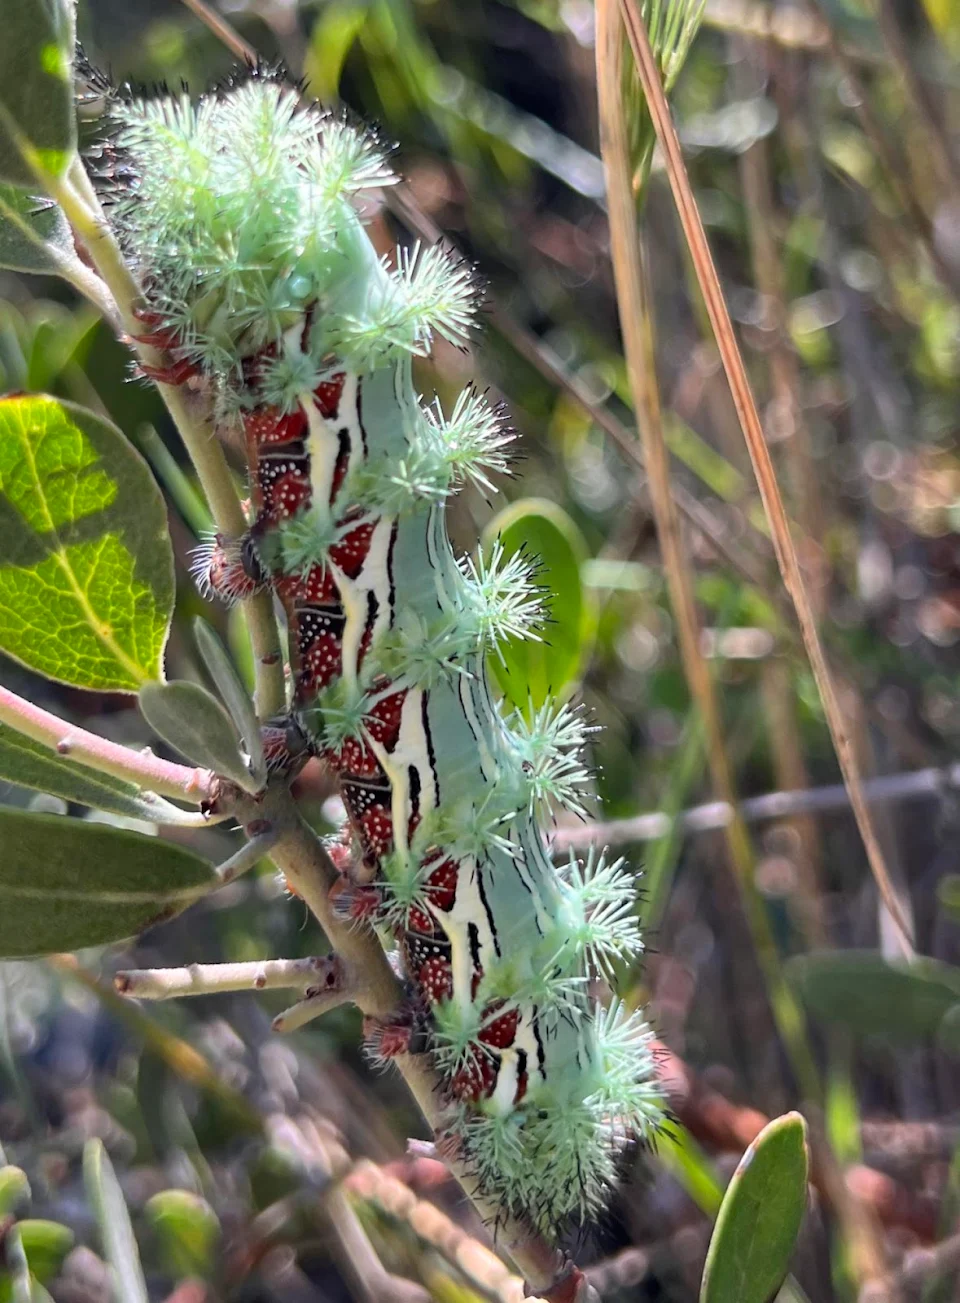 Io moth caterpillar seen in central Arizona. A stunning creature!